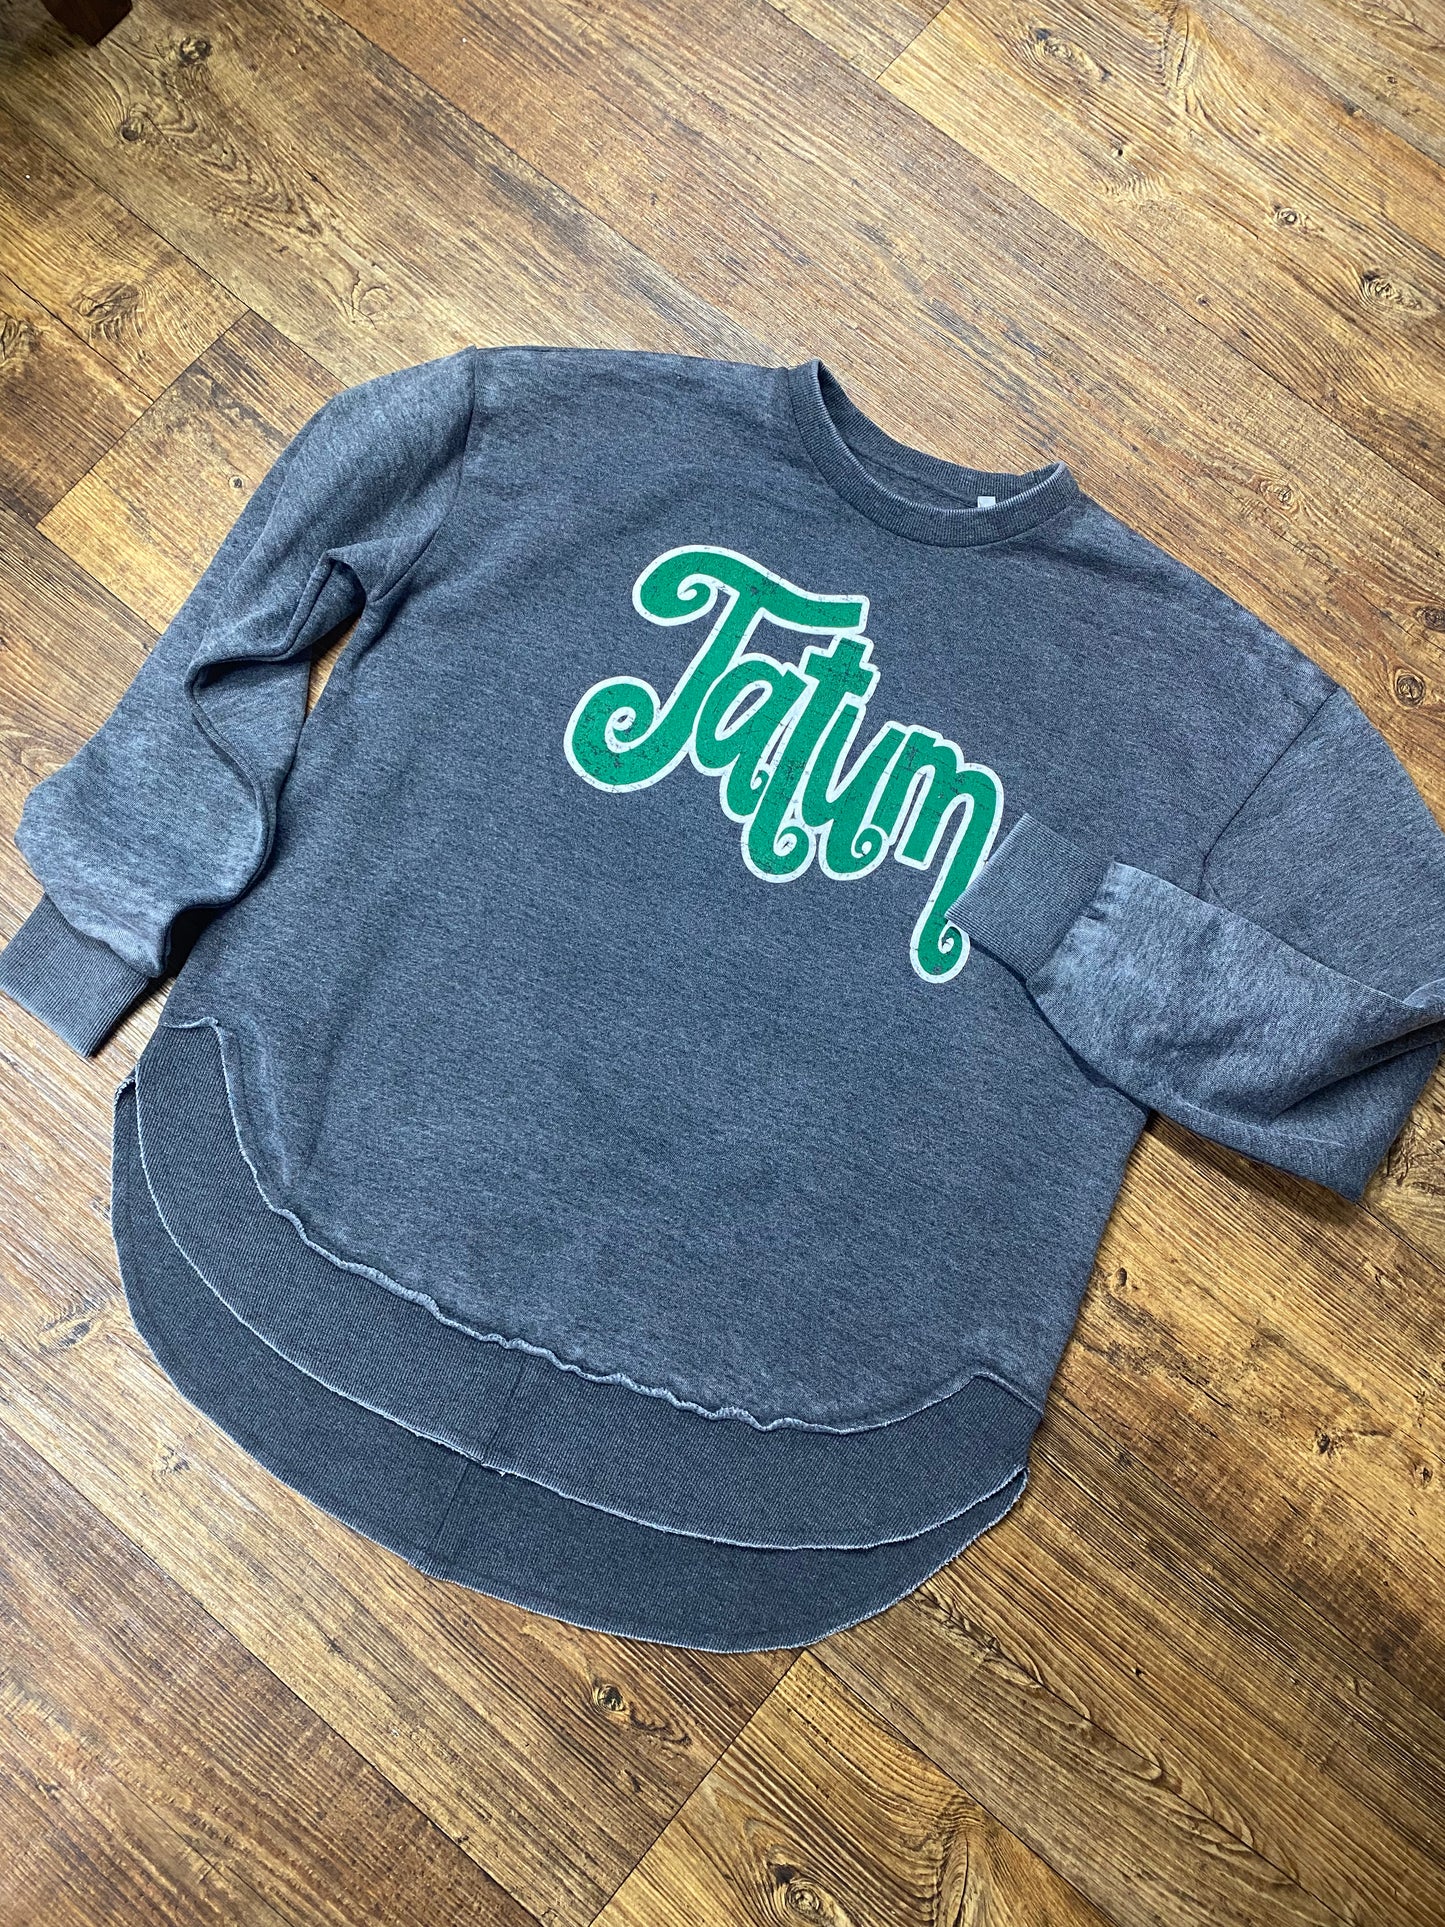 How About Those Tatum Eagles Sweatshirts